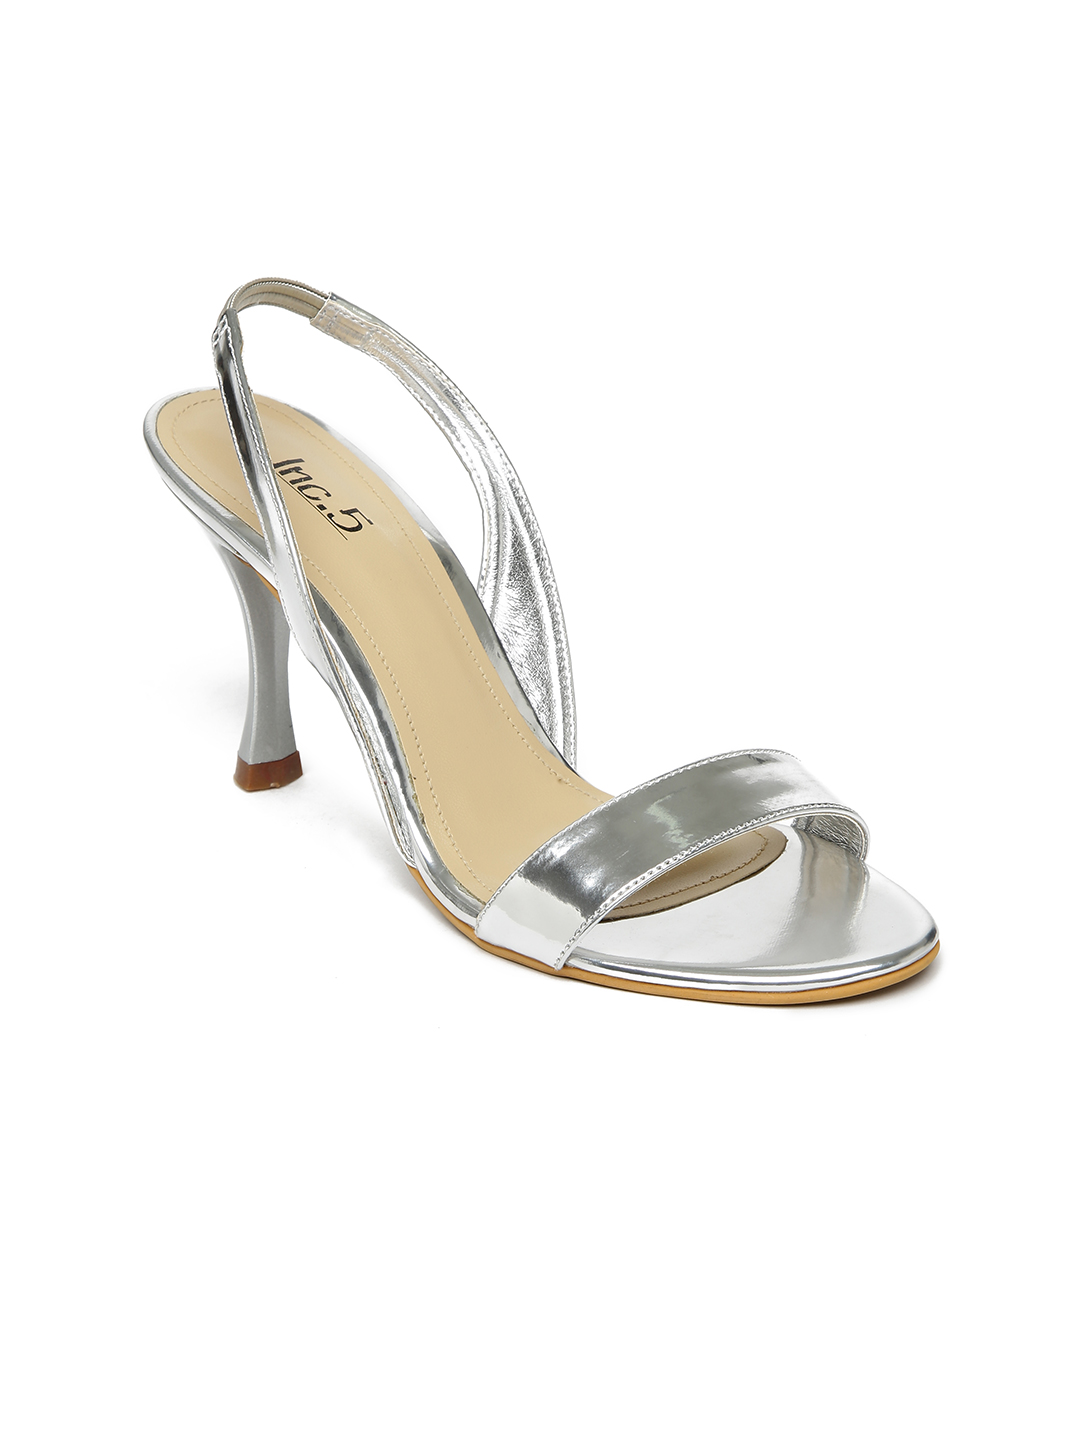 Silver Heels for sale in Devon Park | Facebook Marketplace | Facebook